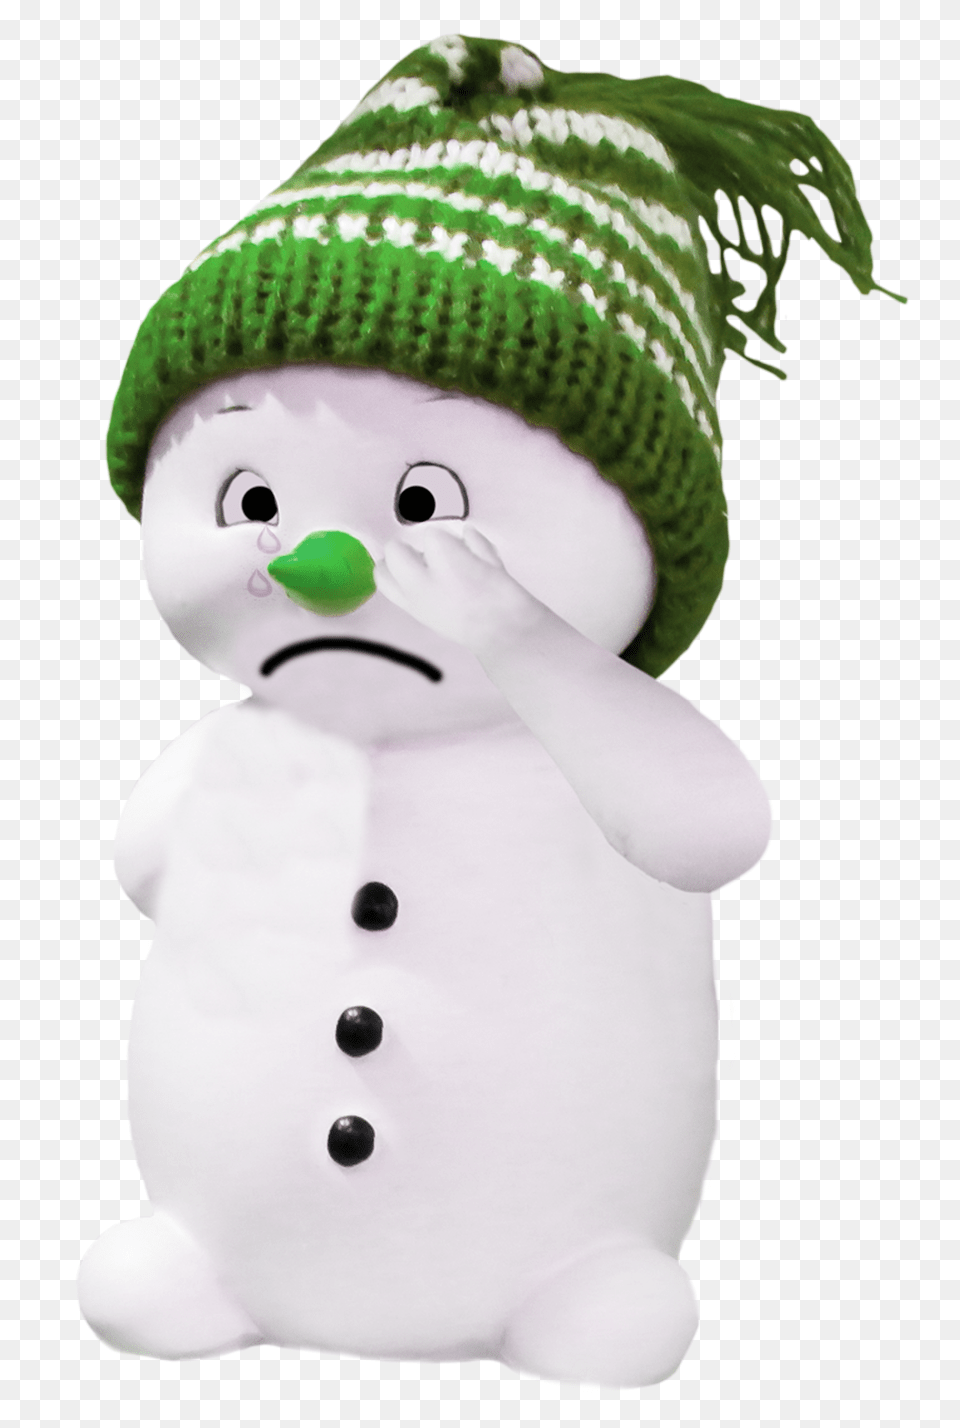 Pngpix Com Snow Man Transparent Image, Cap, Clothing, Hat, Winter Free Png